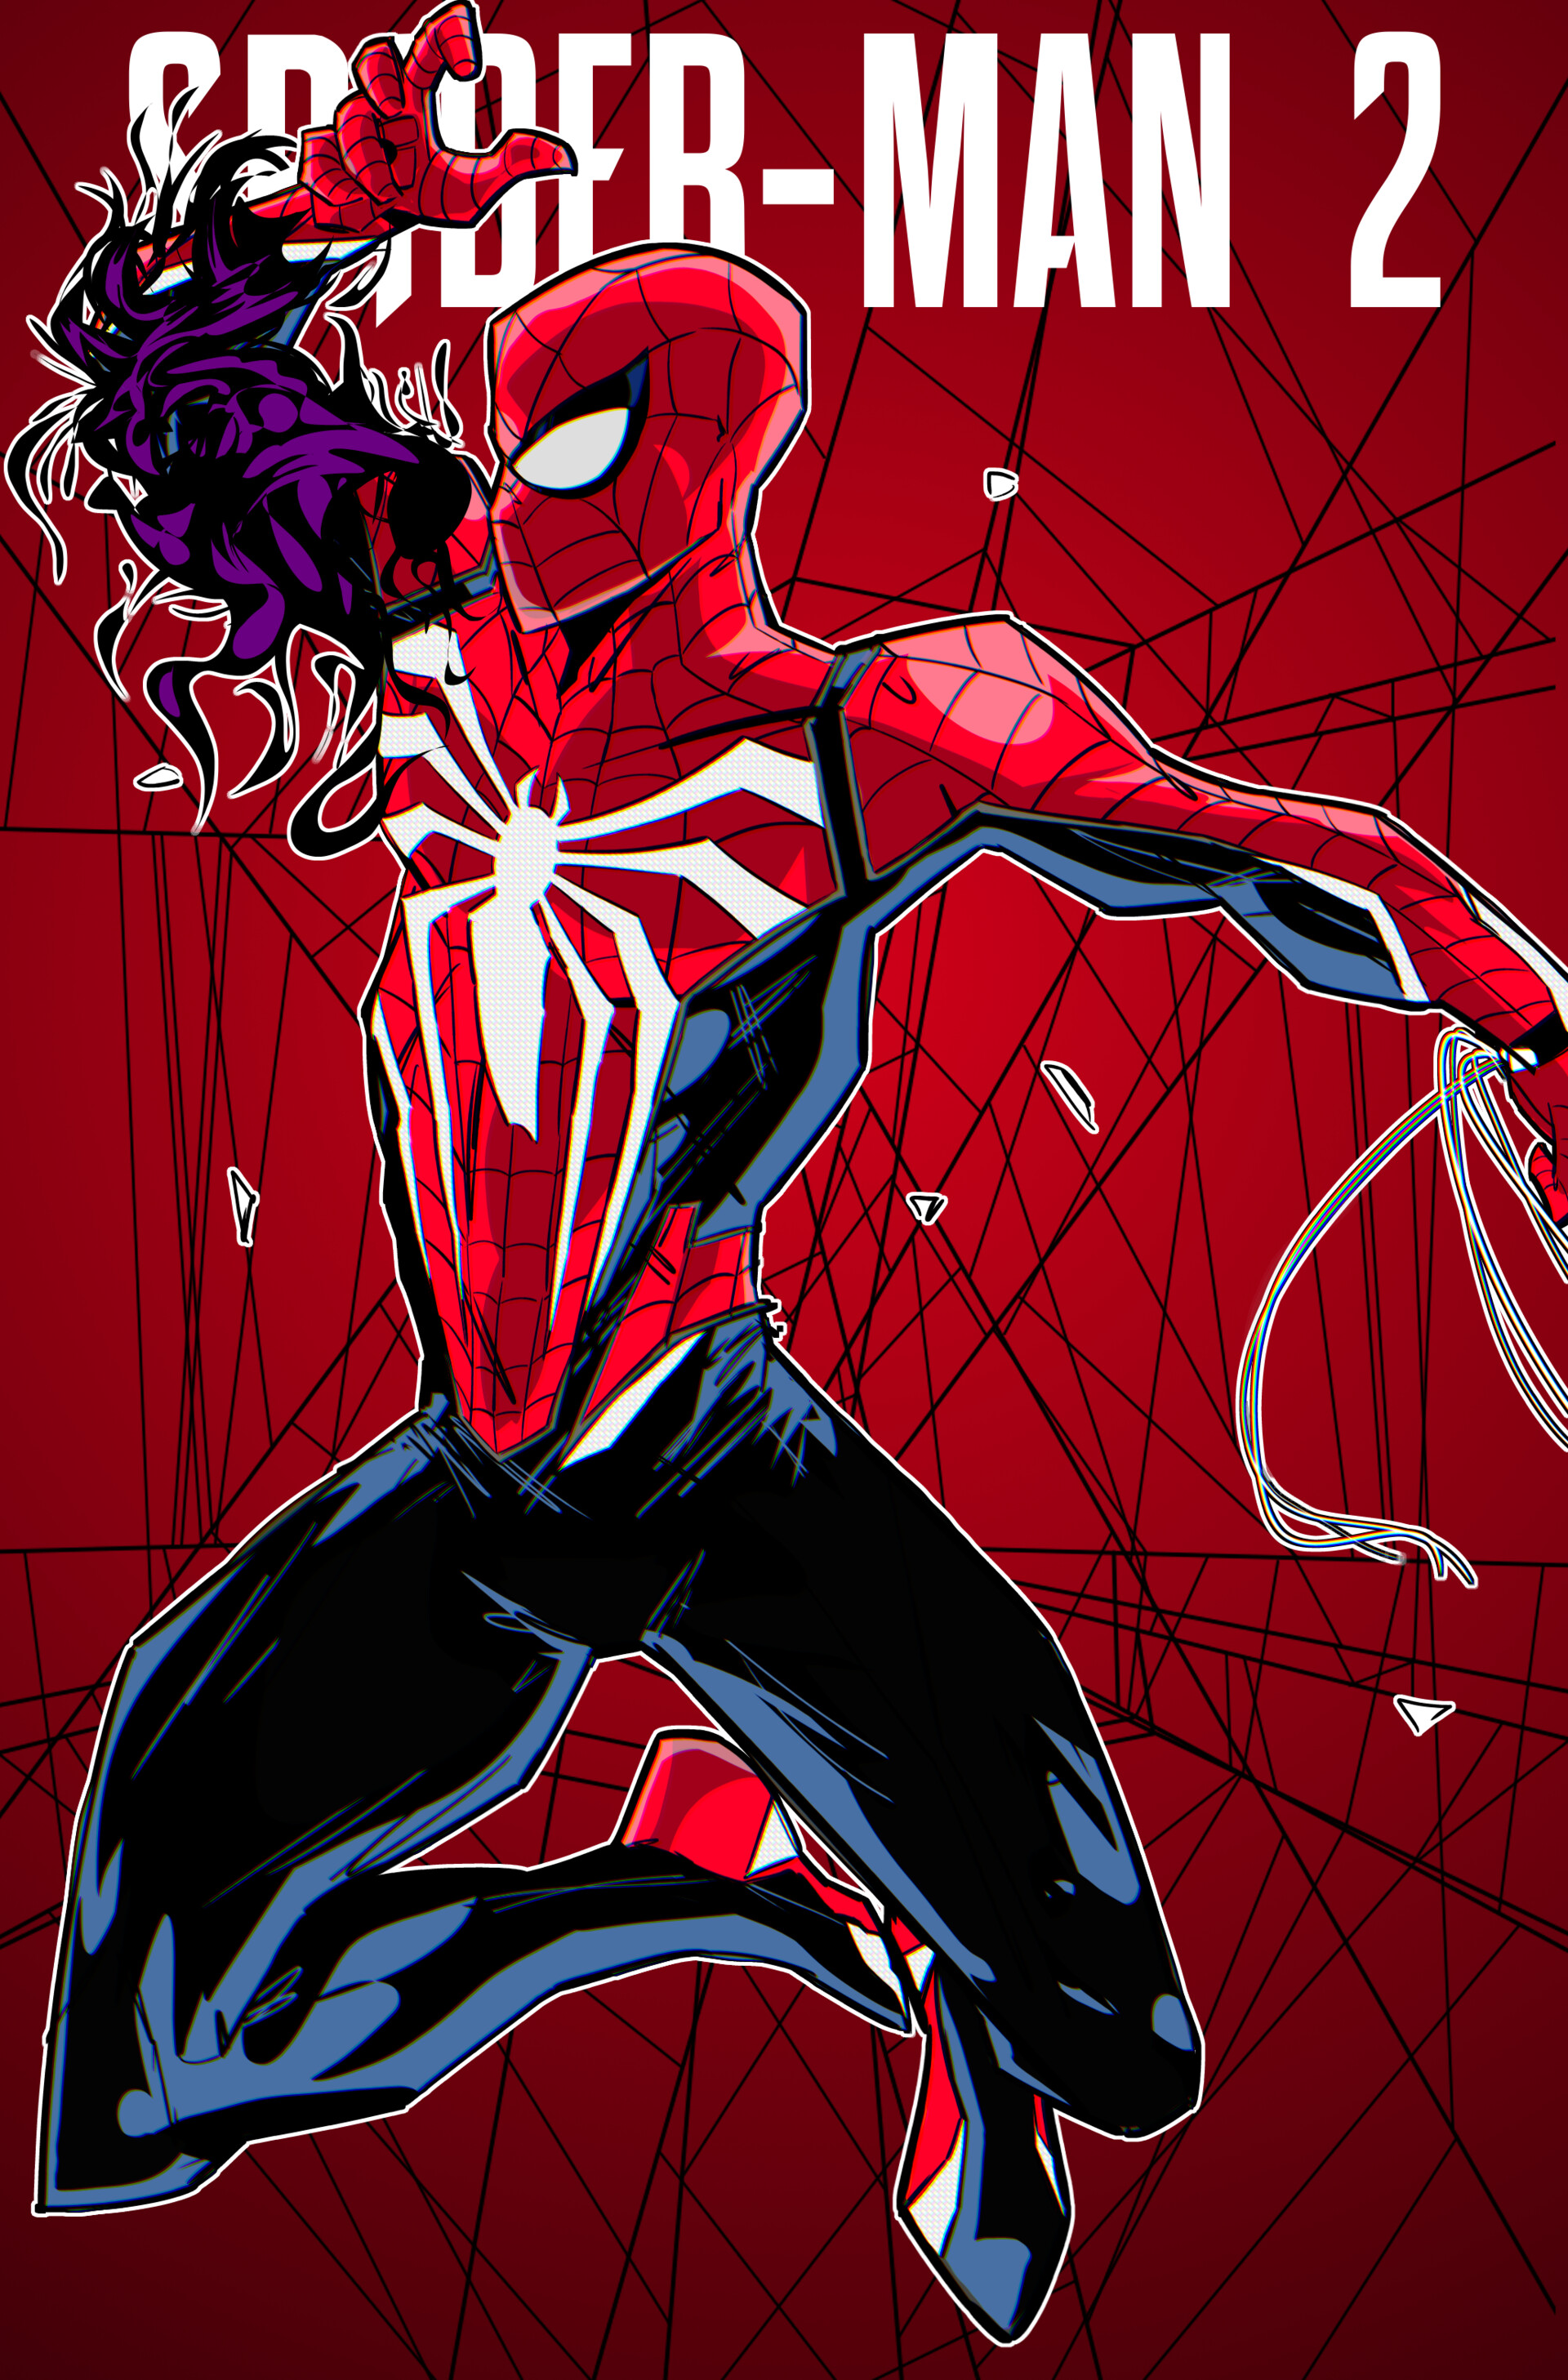 ArtStation - SPIDER-MAN  Spiderman, Spiderman comic, Marvel character  design